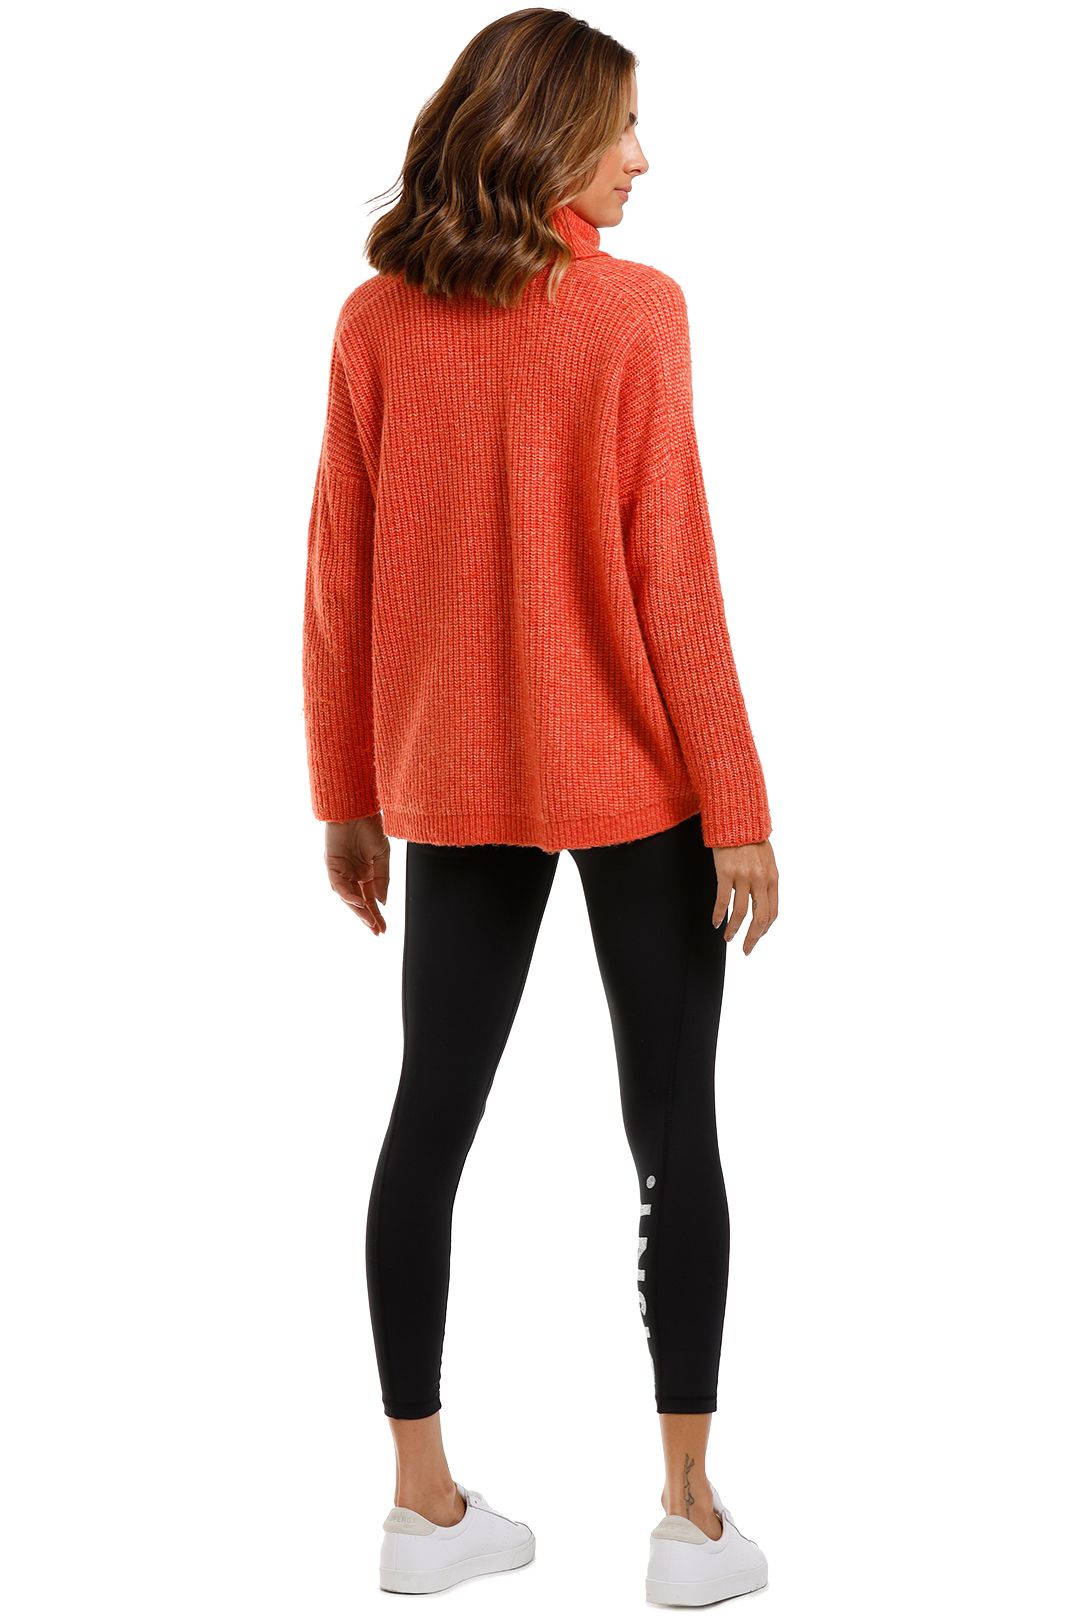 MNG Cowl Neck Sweater Burnt Orange Knit